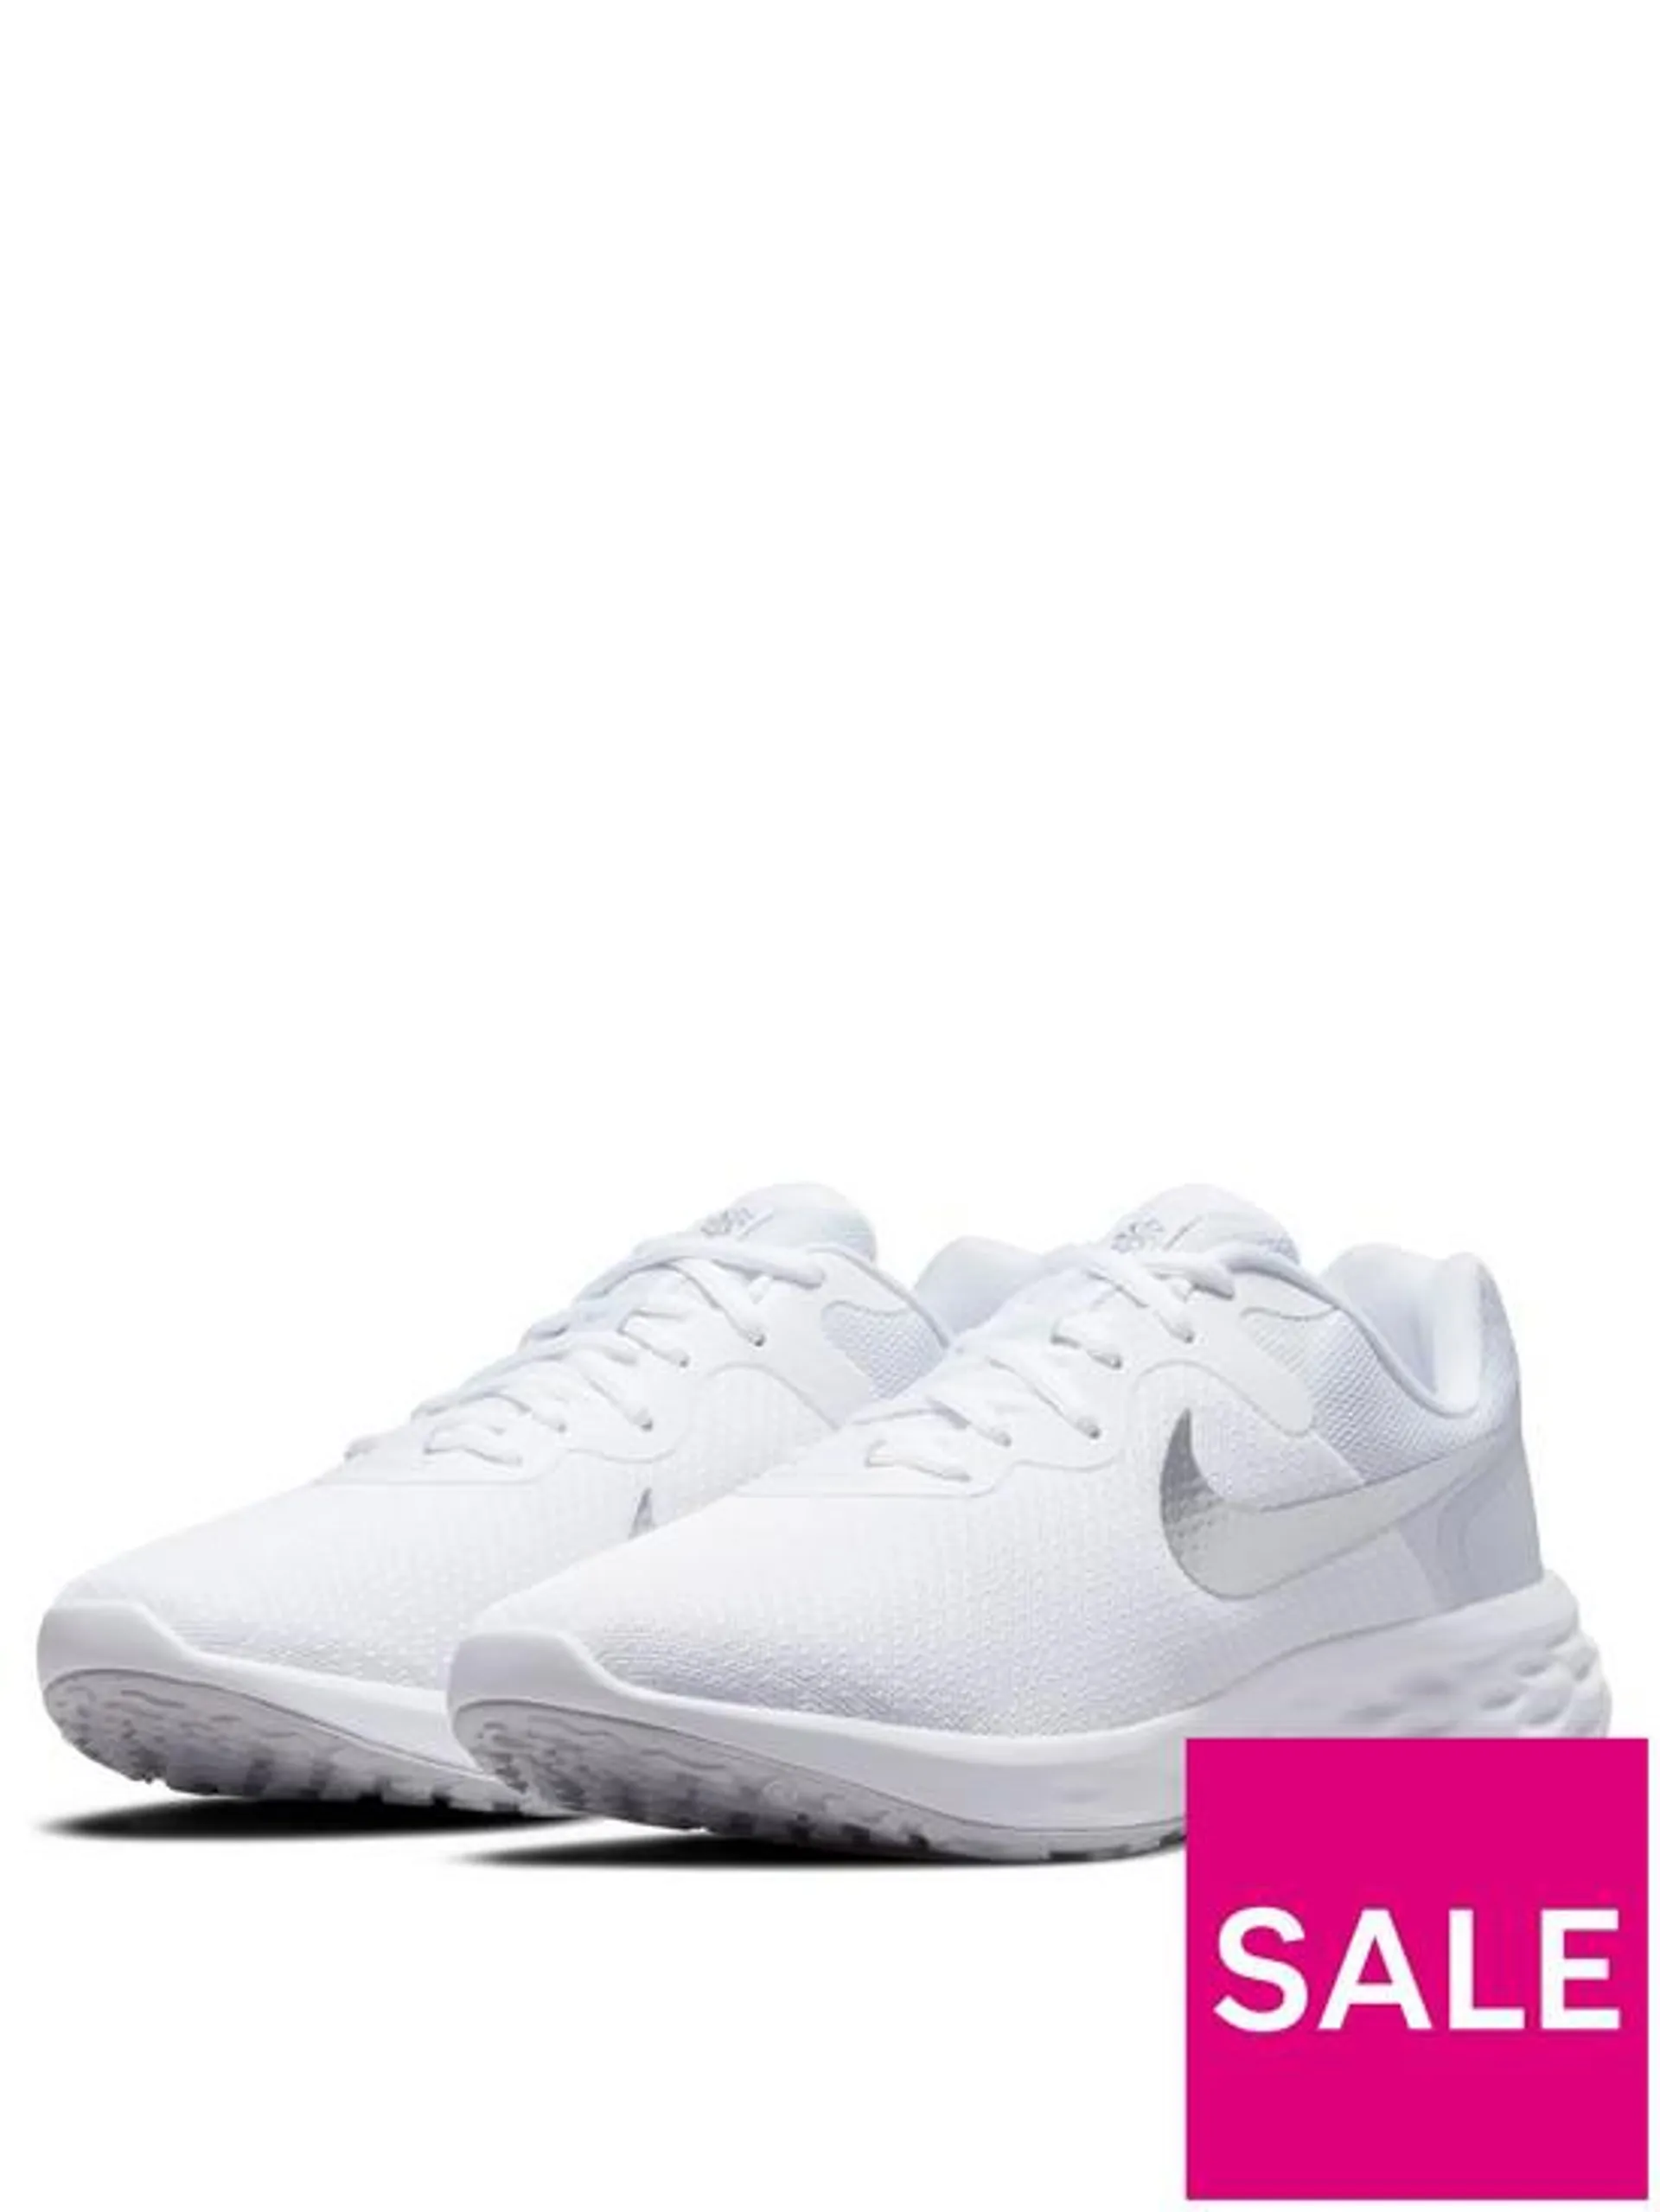 Nike Revolution - White/Silver